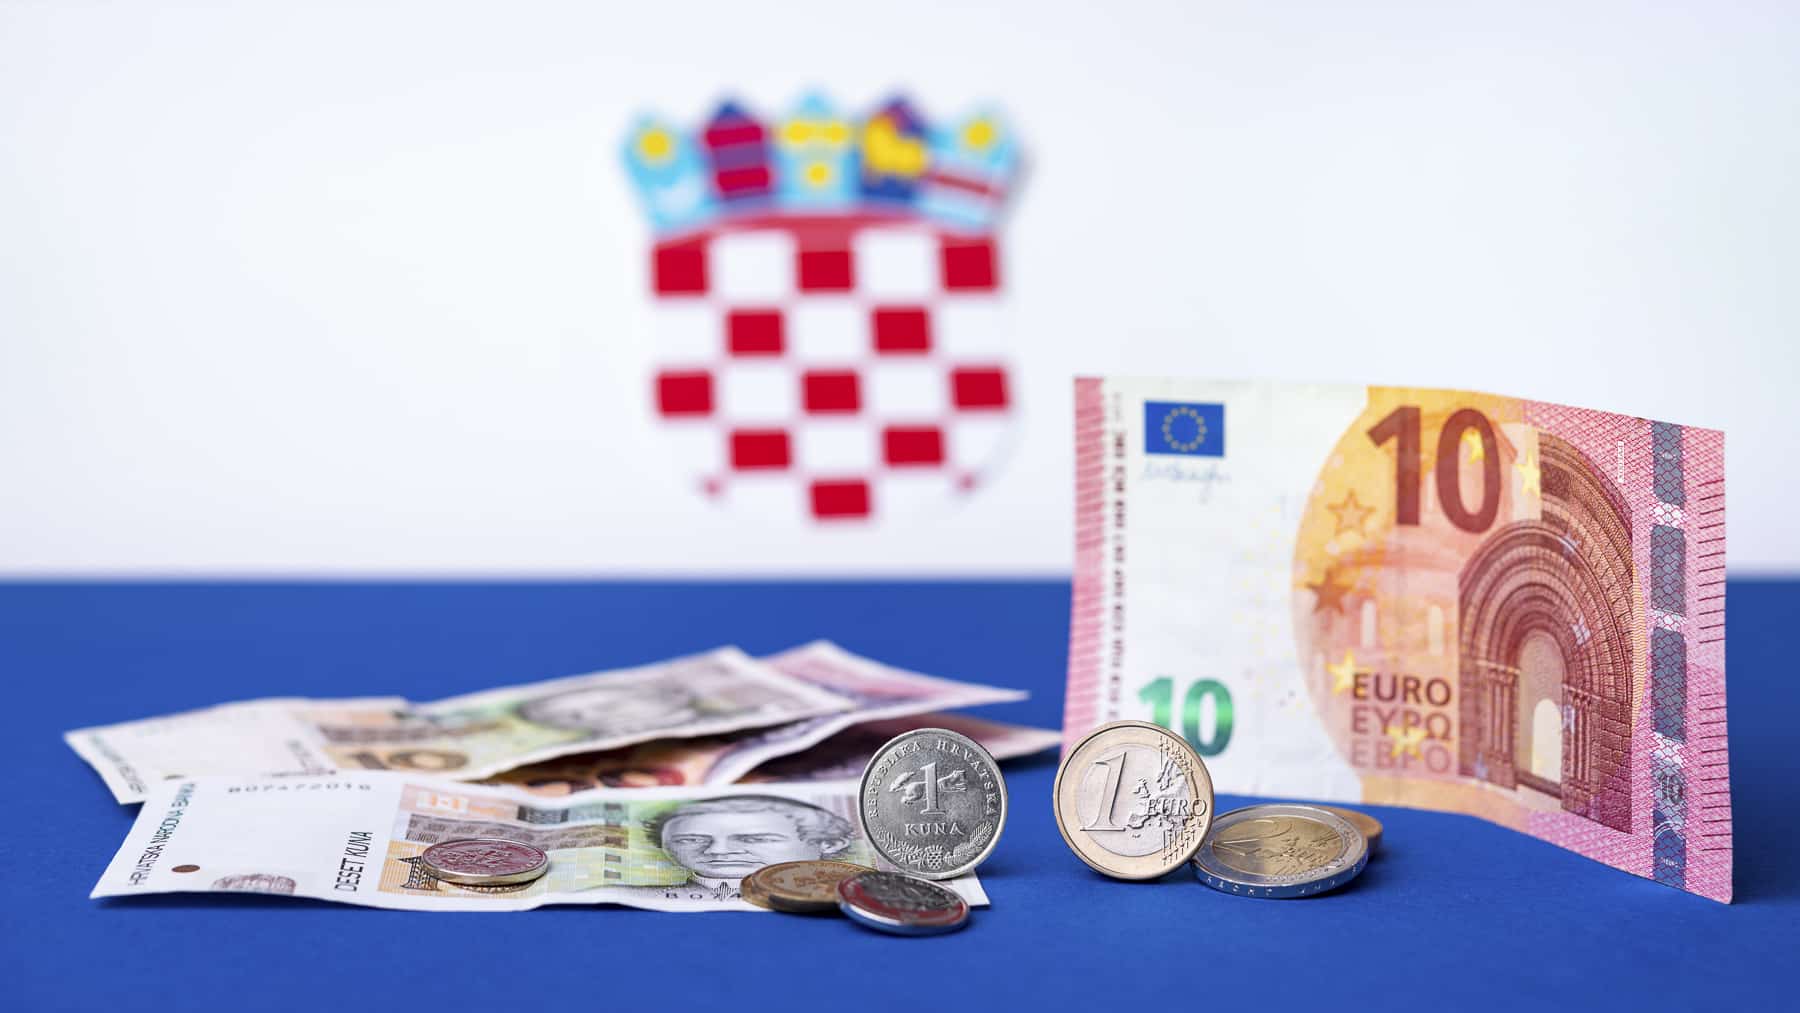 Croatian Currency Guide - We Use Euros In Croatia Since 1 January 